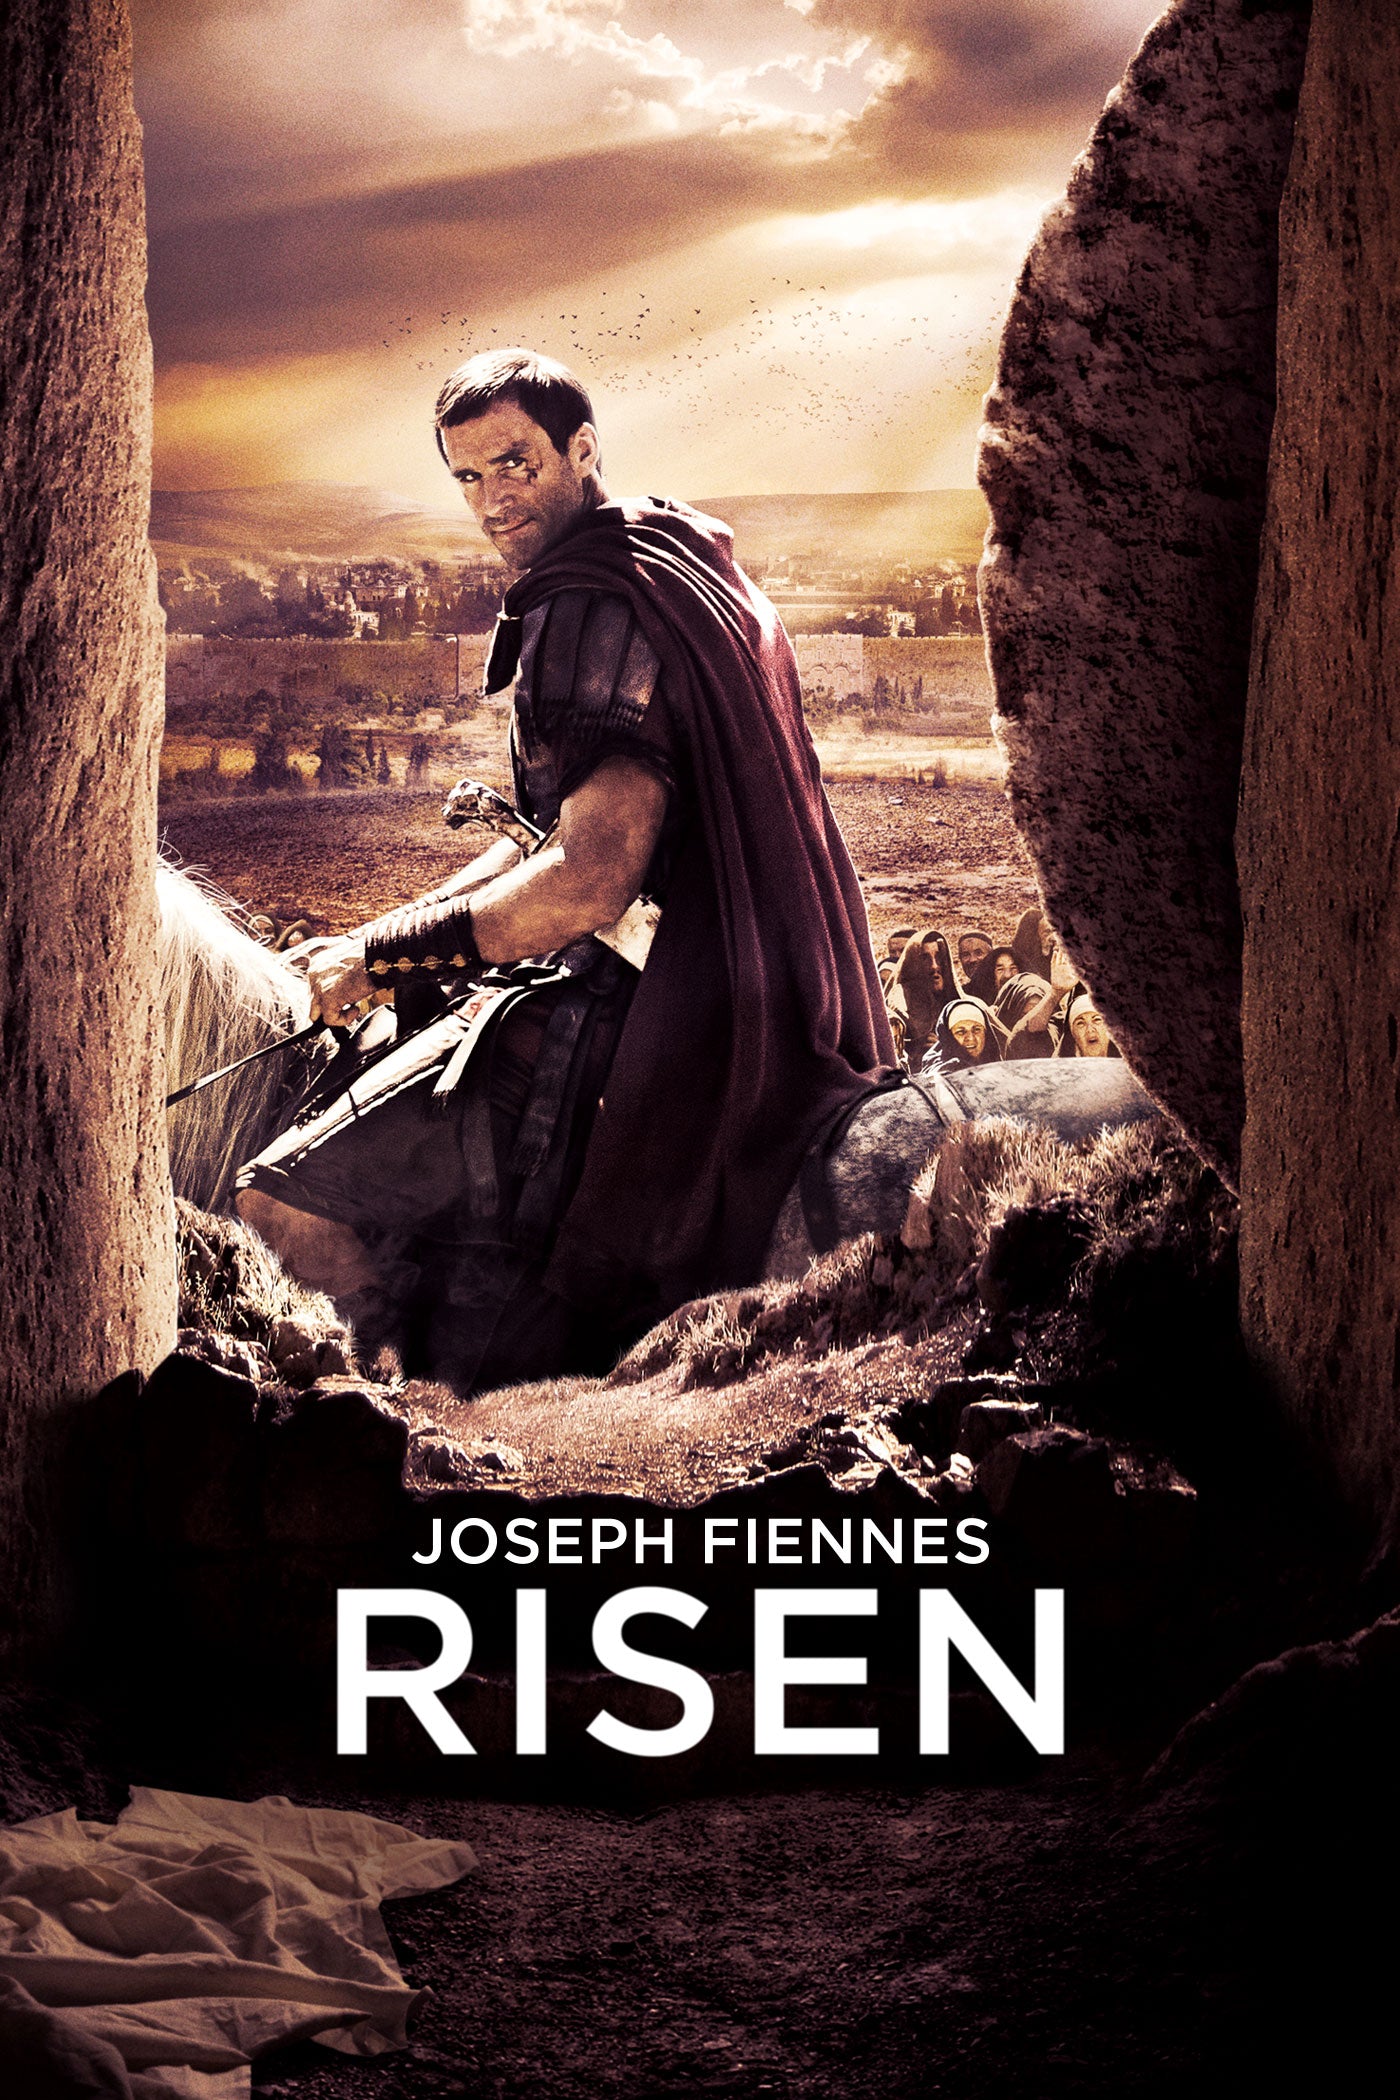 Risen [Blu-ray] cover art